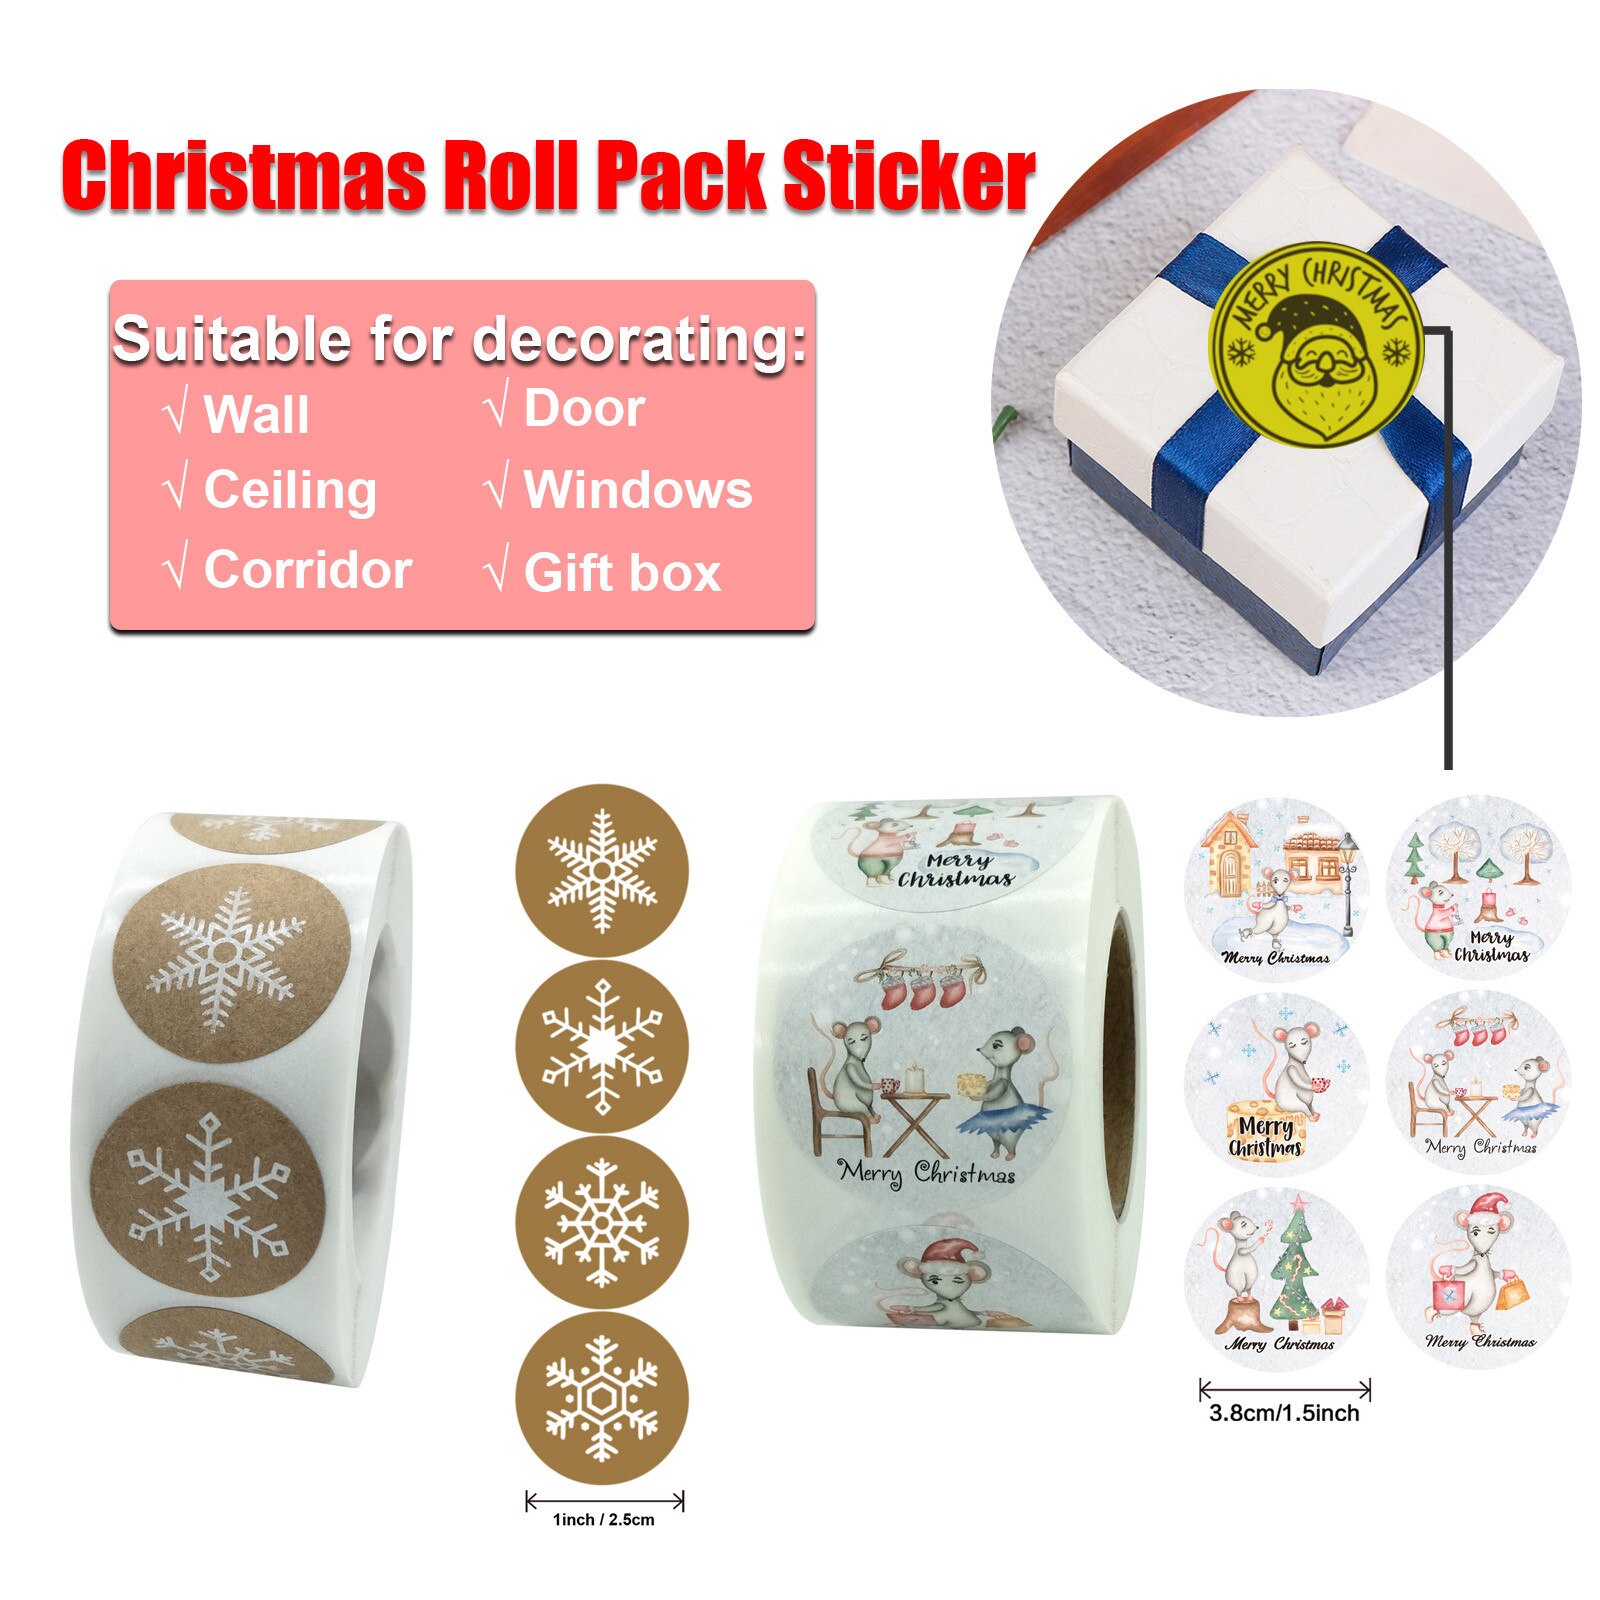 Pack Sticker Kerstvakantie Decorating 1 Roll 500 Berichten Kerst Roll Pack Kerst Sticker Navidad